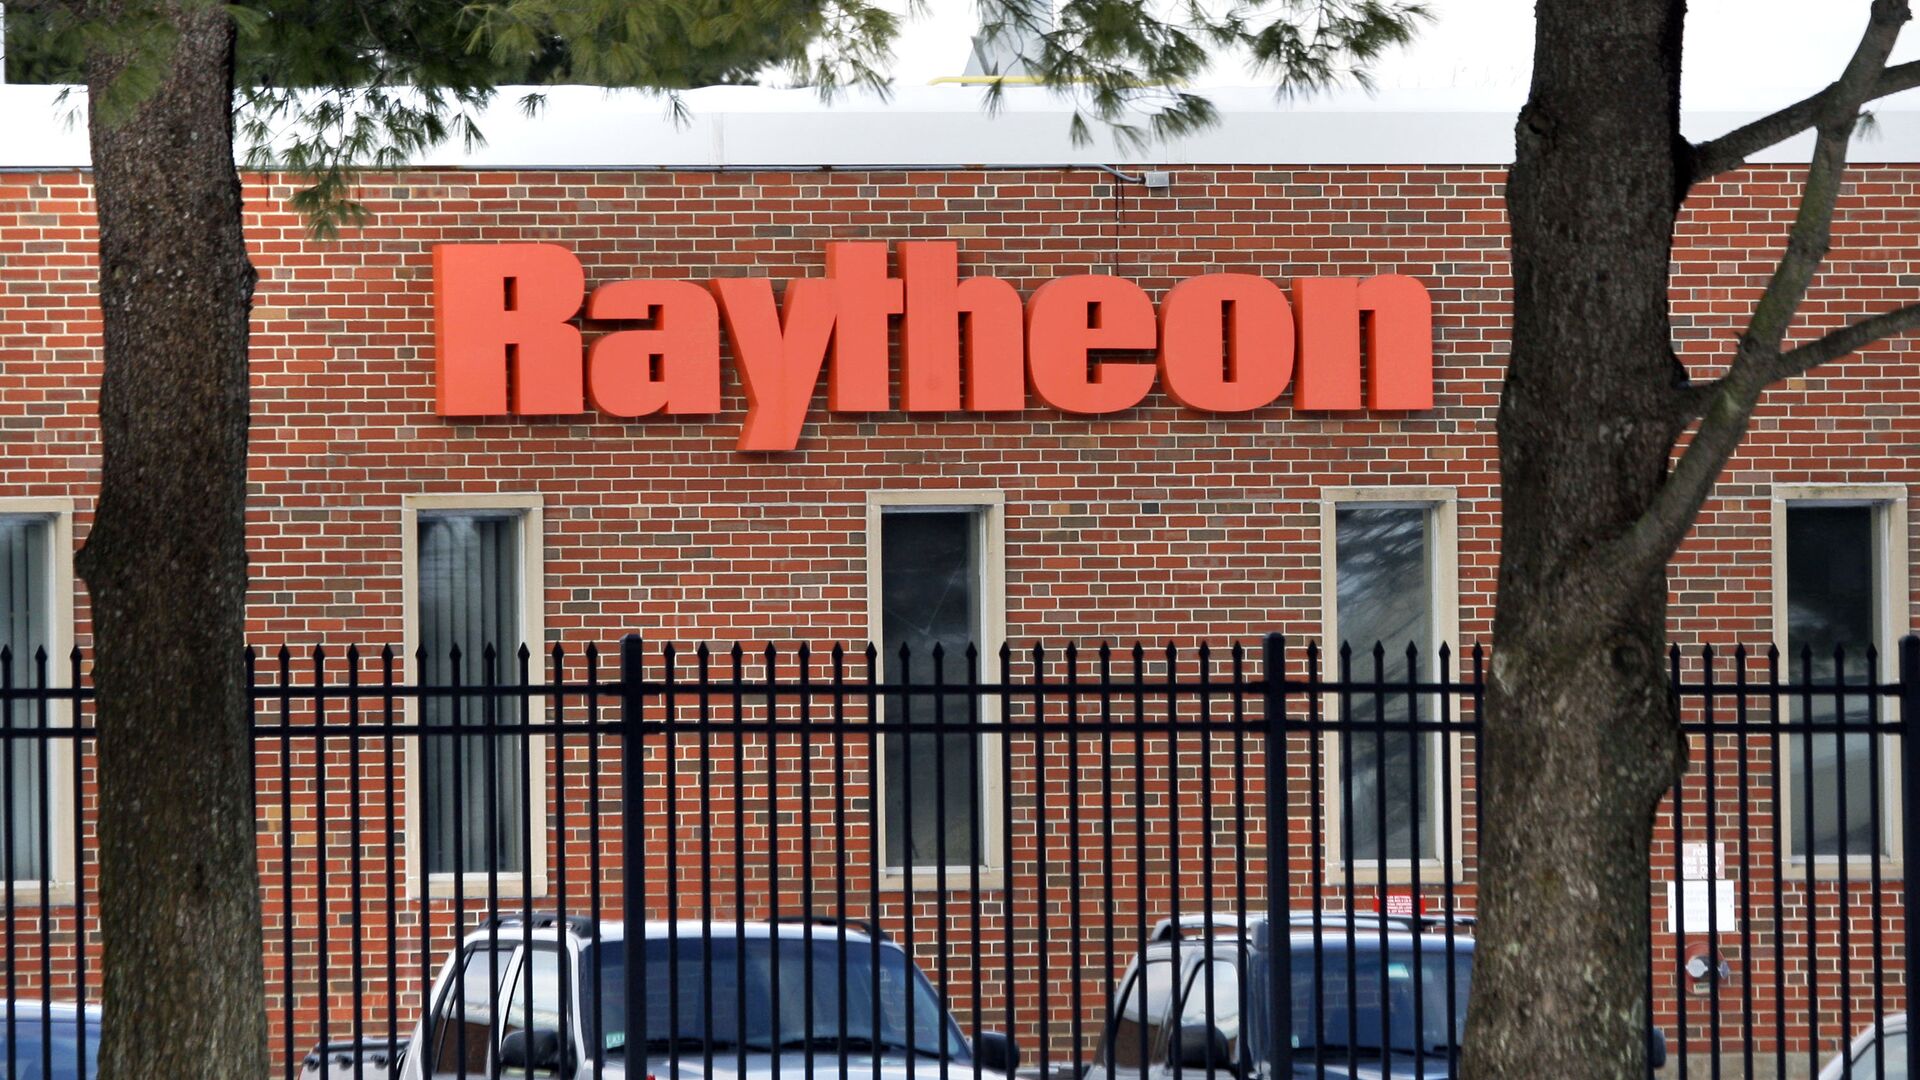 The exterior of Raytheon Co. in Sudbury, Mass. is seen Thursday, Jan. 29, 2009. - Sputnik International, 1920, 08.09.2021